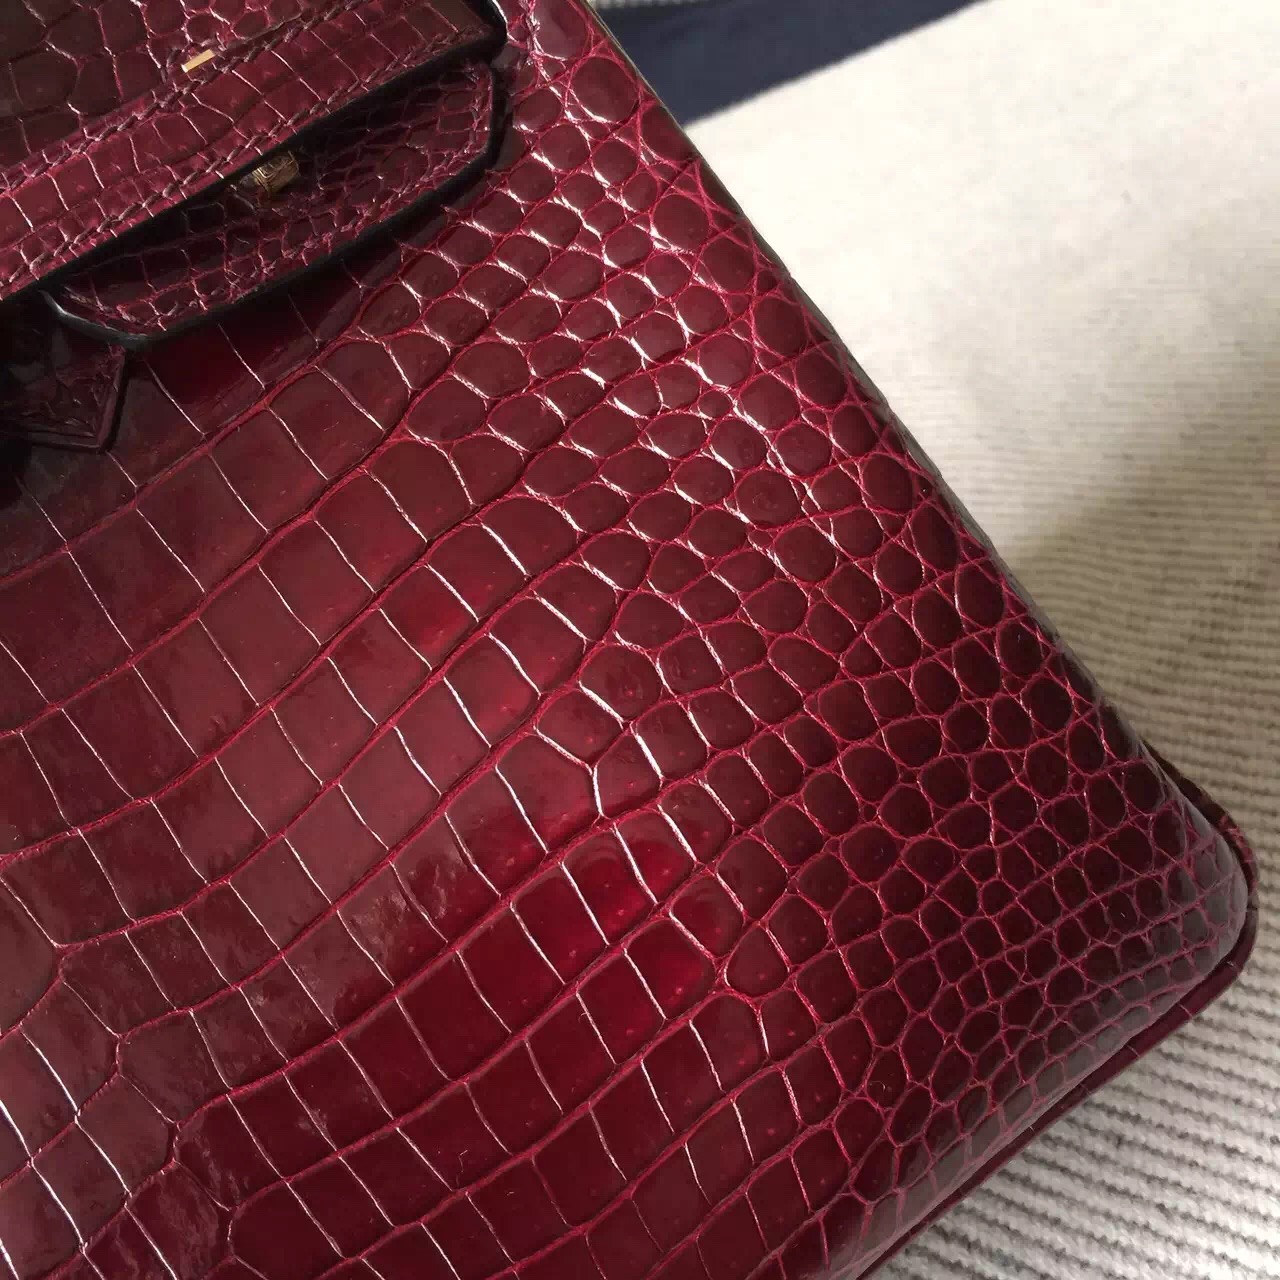 Hermes Crocodile Shiny Leather Birkin25 Bag in CK57 Bordeaux